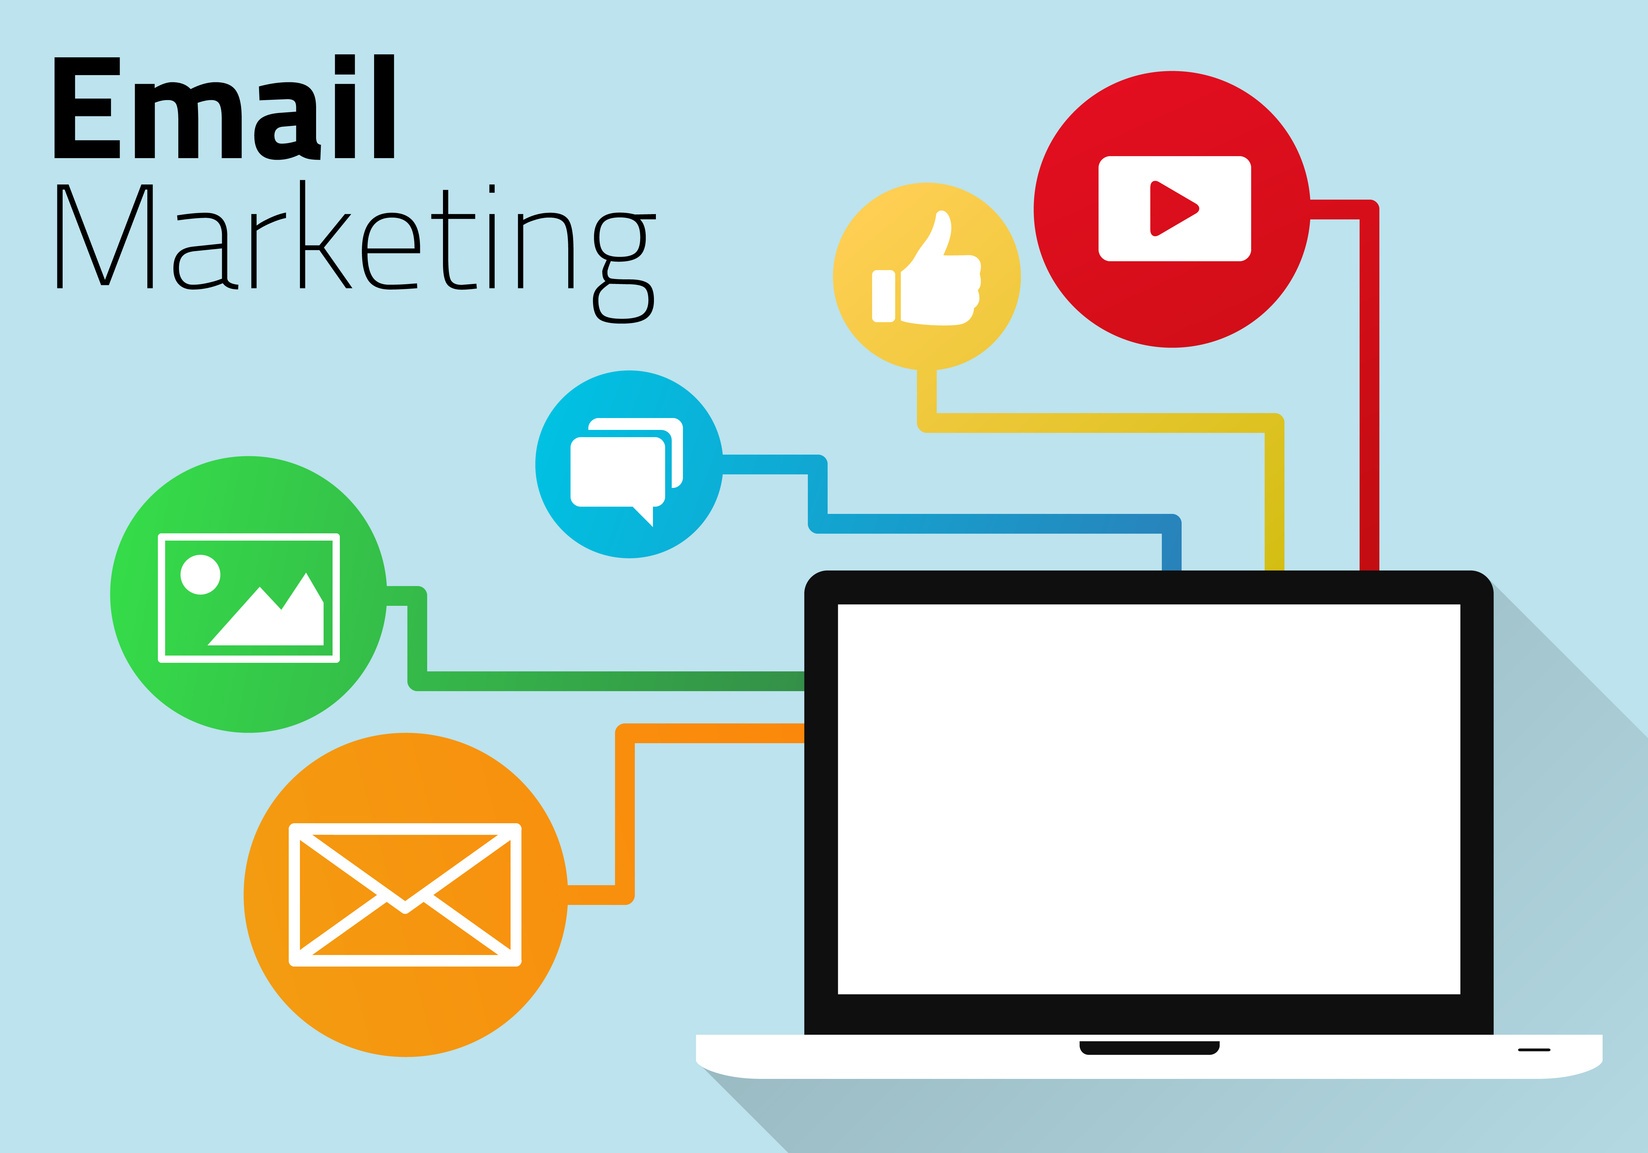 Market listing com. Email маркетинг. E-mail маркетинг. Е маил маркетинг. Email-маркетинг (email marketing).